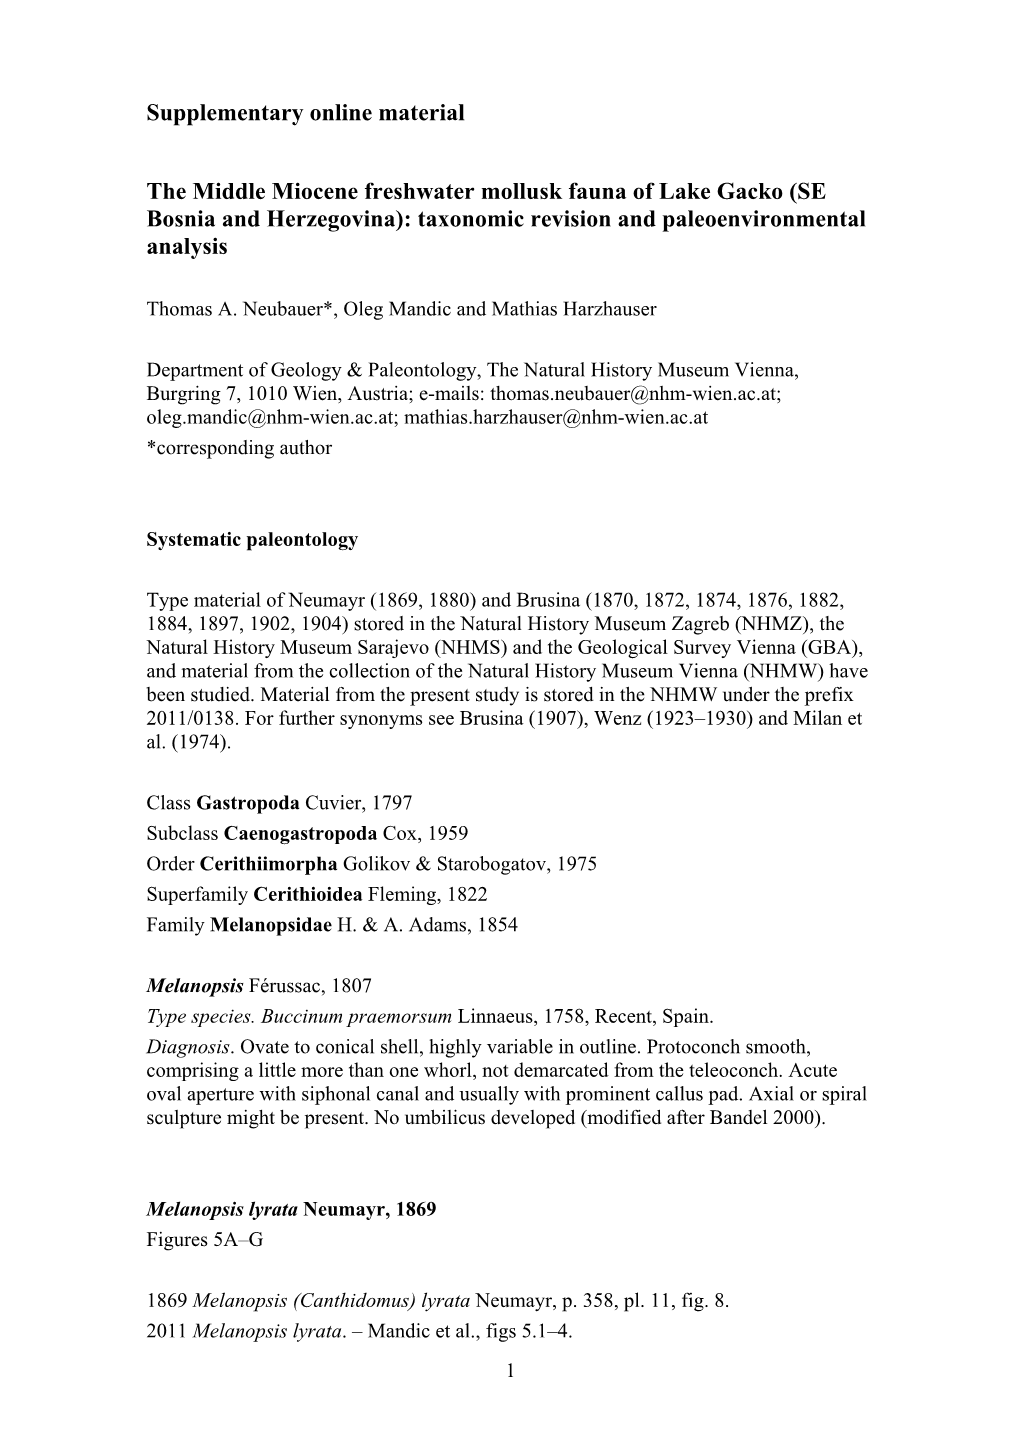 The Middle Miocene Freshwater Mollusk Fauna of Lake Gacko (SE Bosnia and Herzegovina): Taxonomic Revision and Paleoenvironmental Analysis